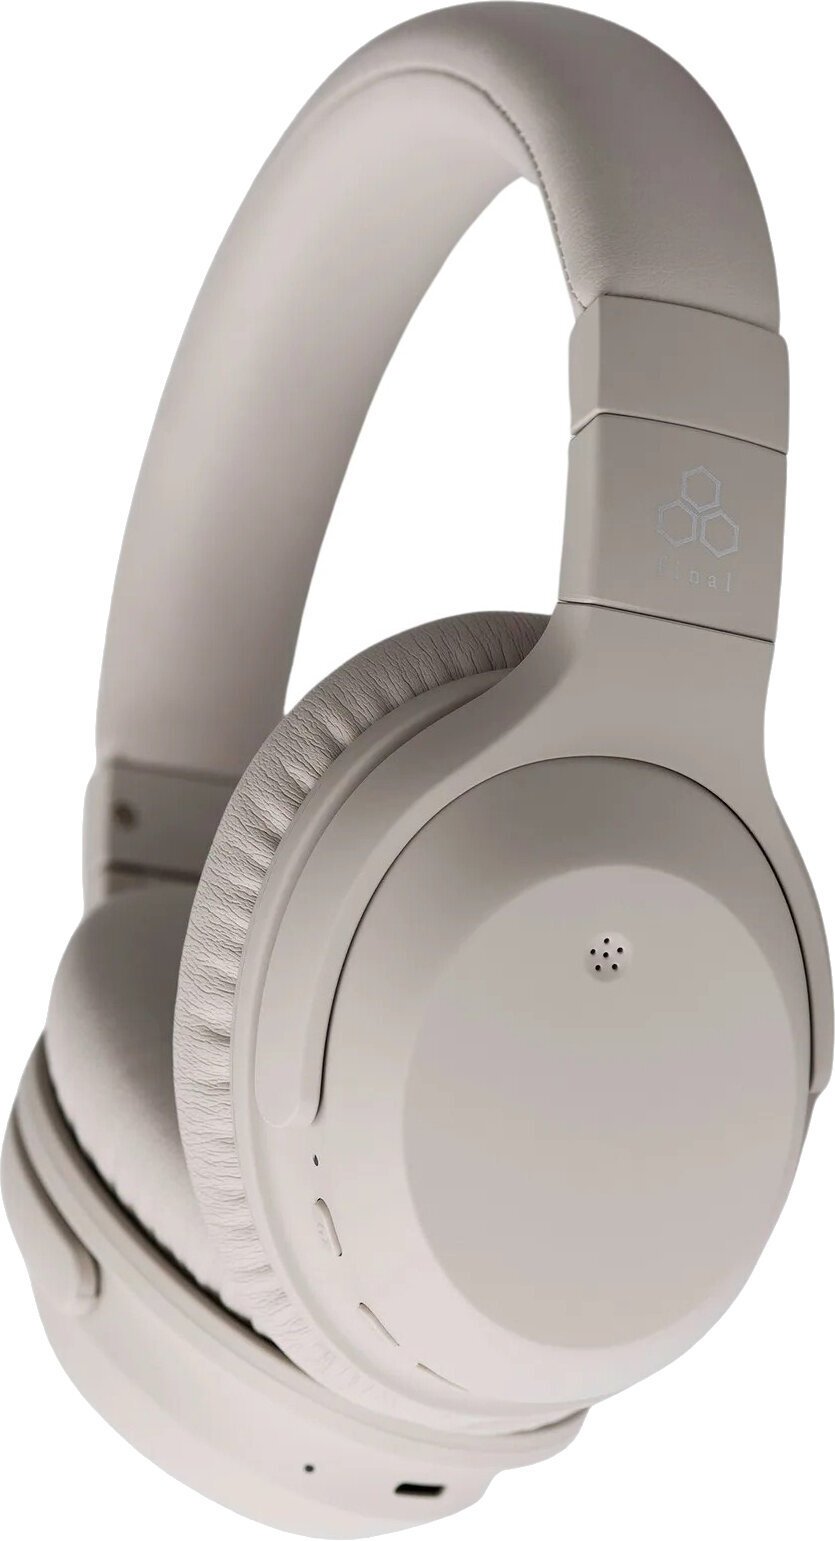 Wireless On-ear headphones Final Audio UX2000 Creme